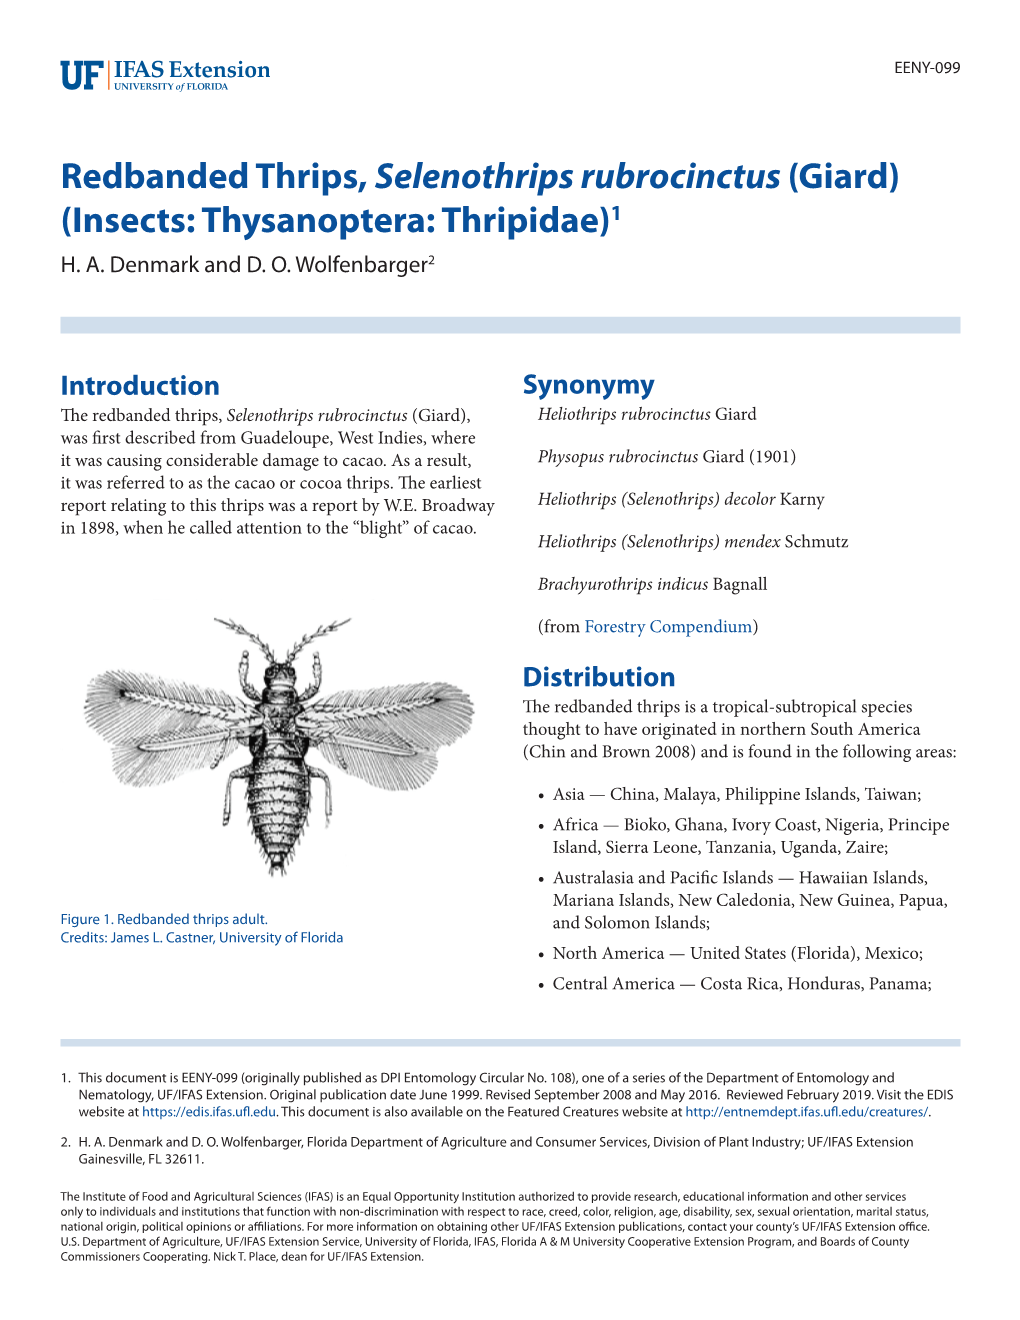 Redbanded Thrips, Selenothrips Rubrocinctus (Giard) (Insects: Thysanoptera: Thripidae)1 H